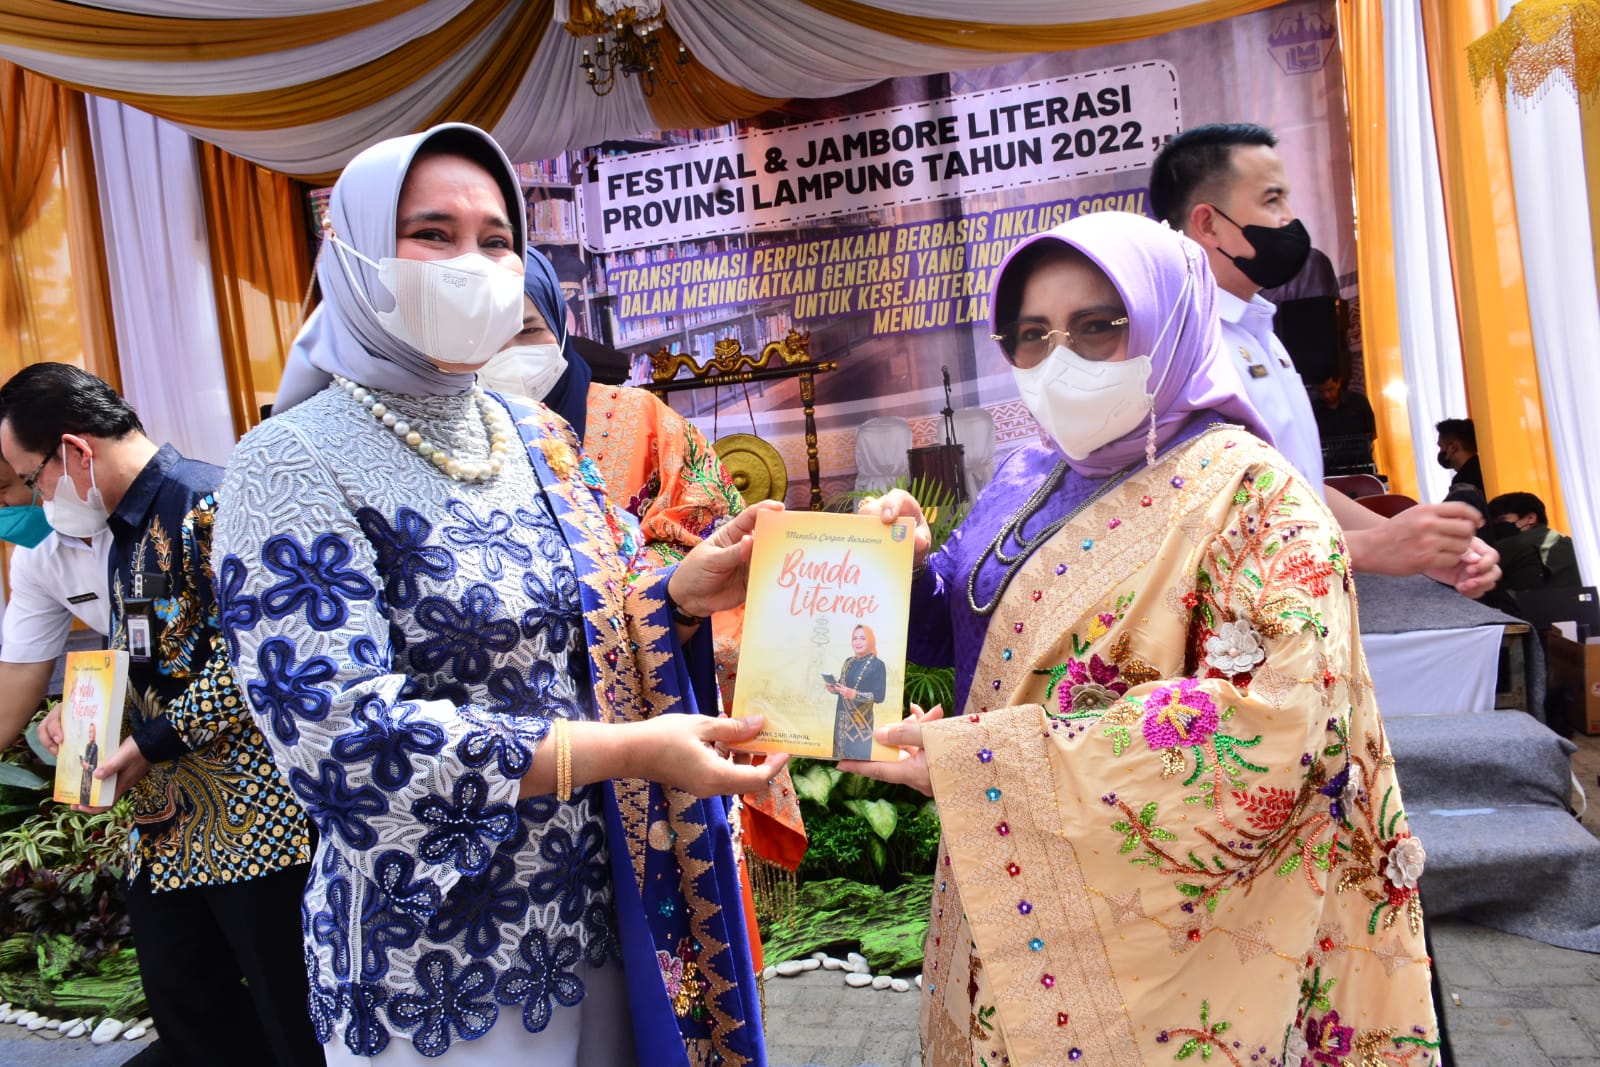 Satu Kebanggaan, Bunda Literasi Lamteng Terima Reward dari Bunda Literasi Lampung